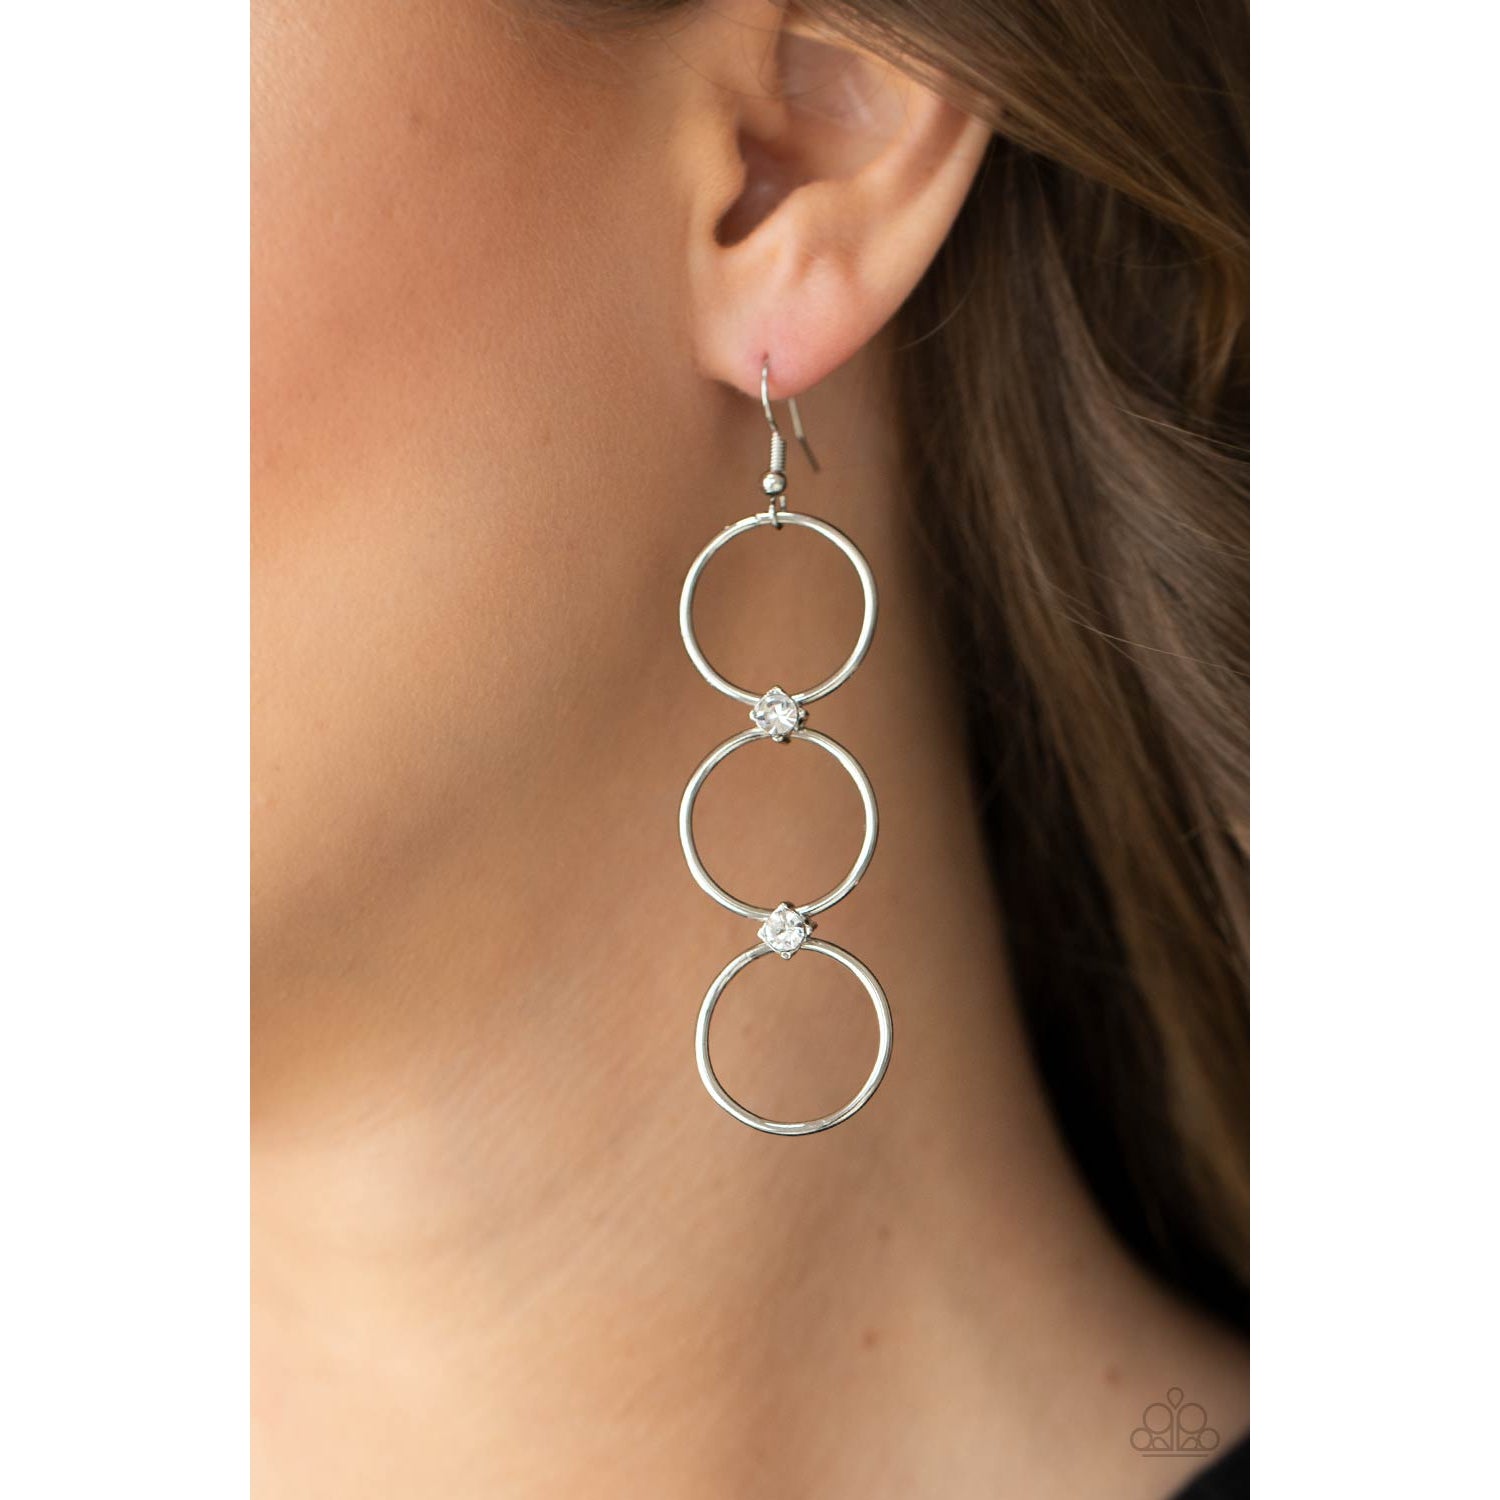 Refined Society - White Rhinestone Earrings - Paparazzi Accessories - GlaMarous Titi Jewels